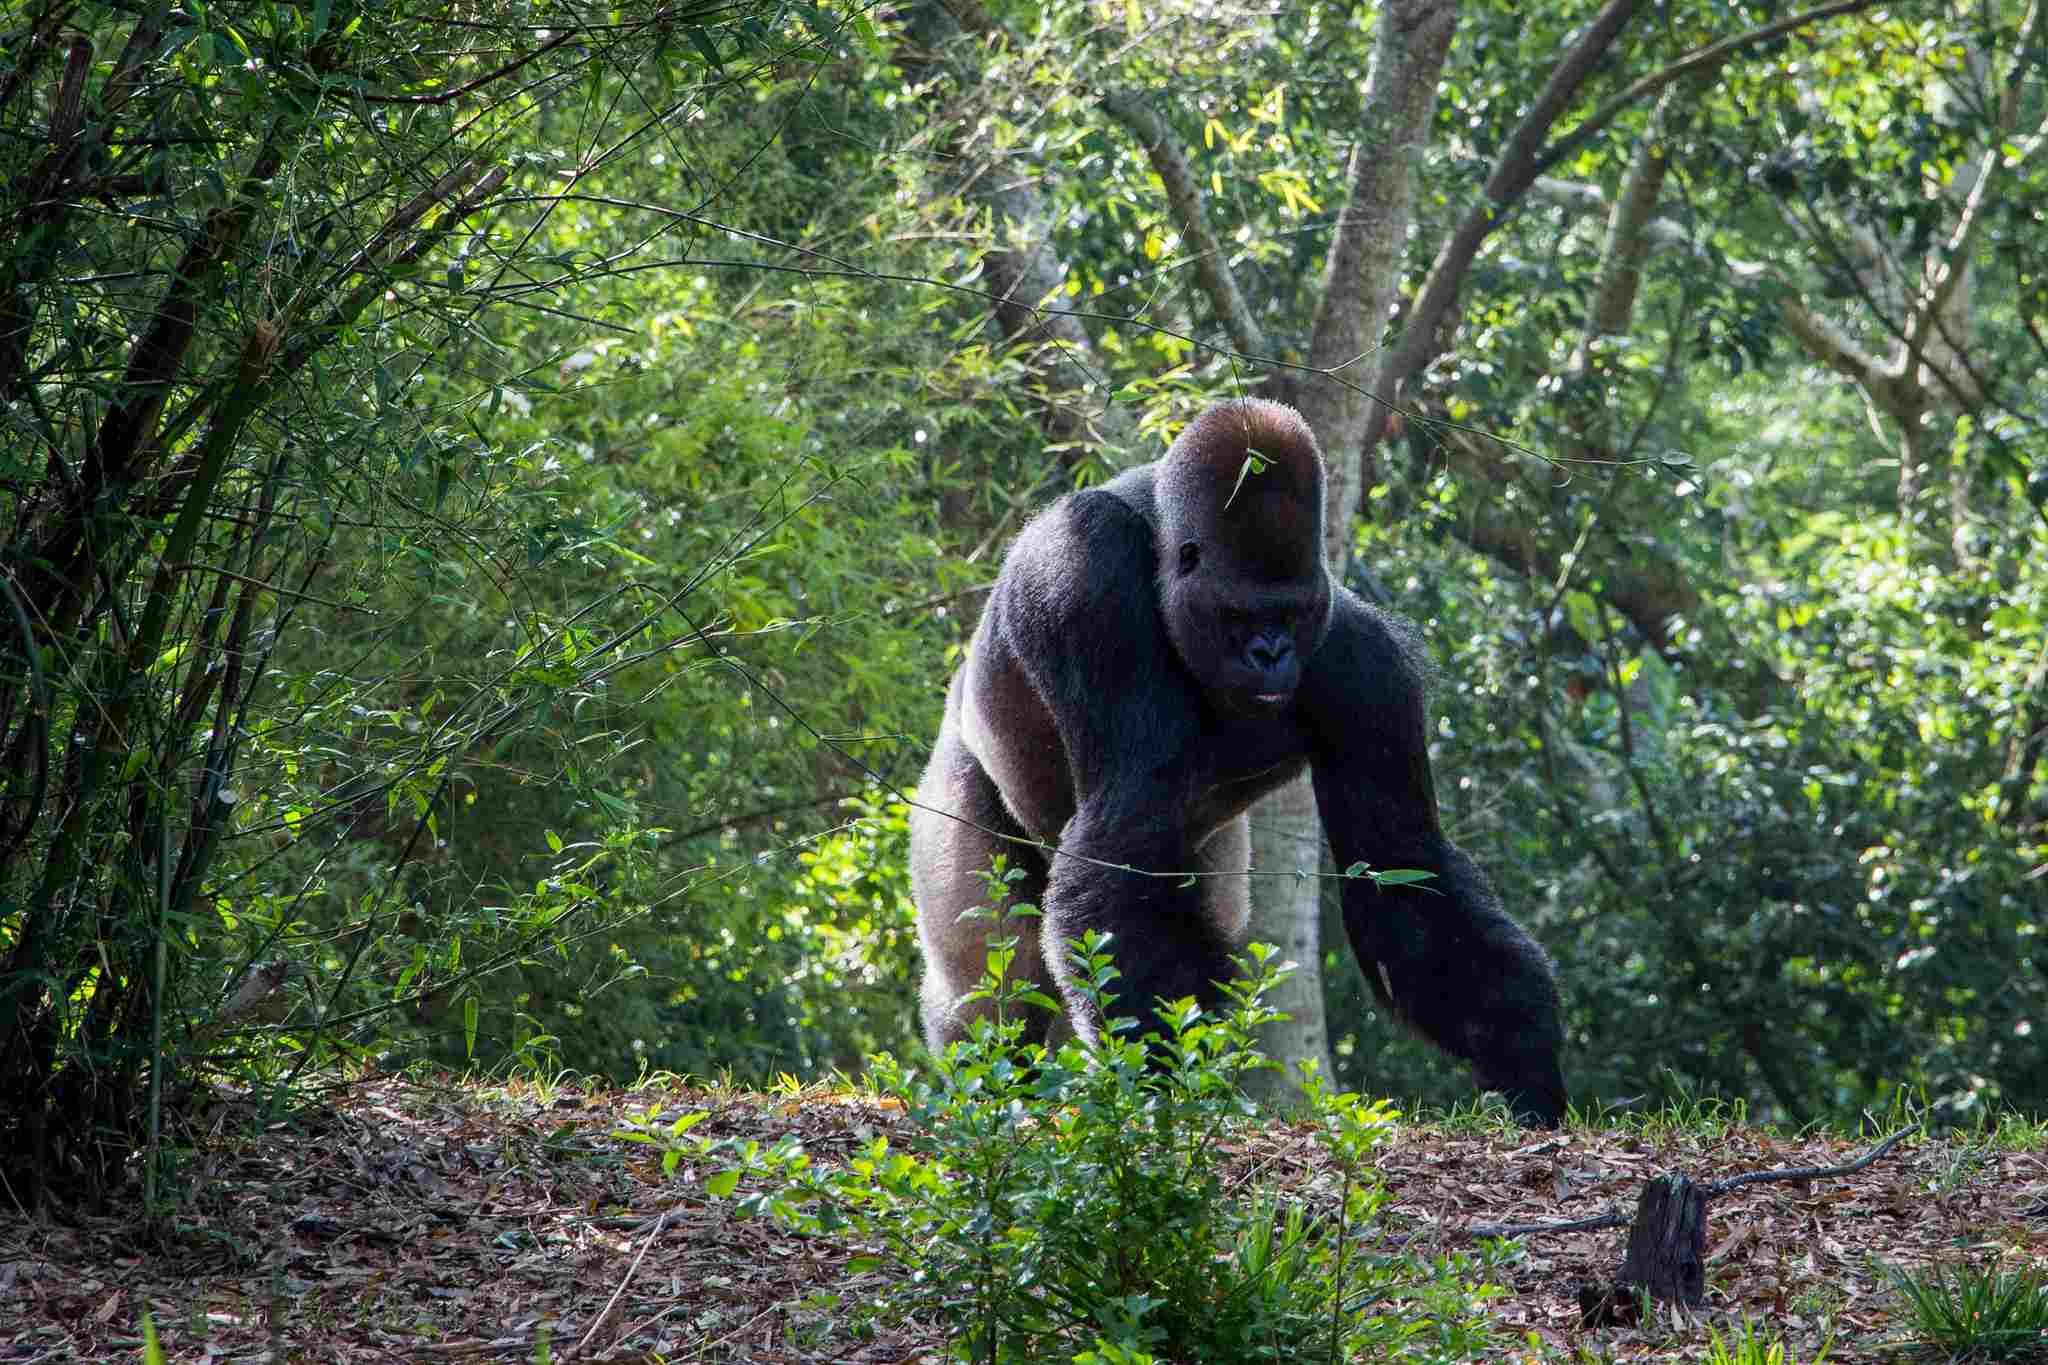 Kodiak Bear Vs Gorilla: Deforestation and Climate Change are Threats to Gorillas (Credit: HarshLight 2014 .CC BY 2.0.)